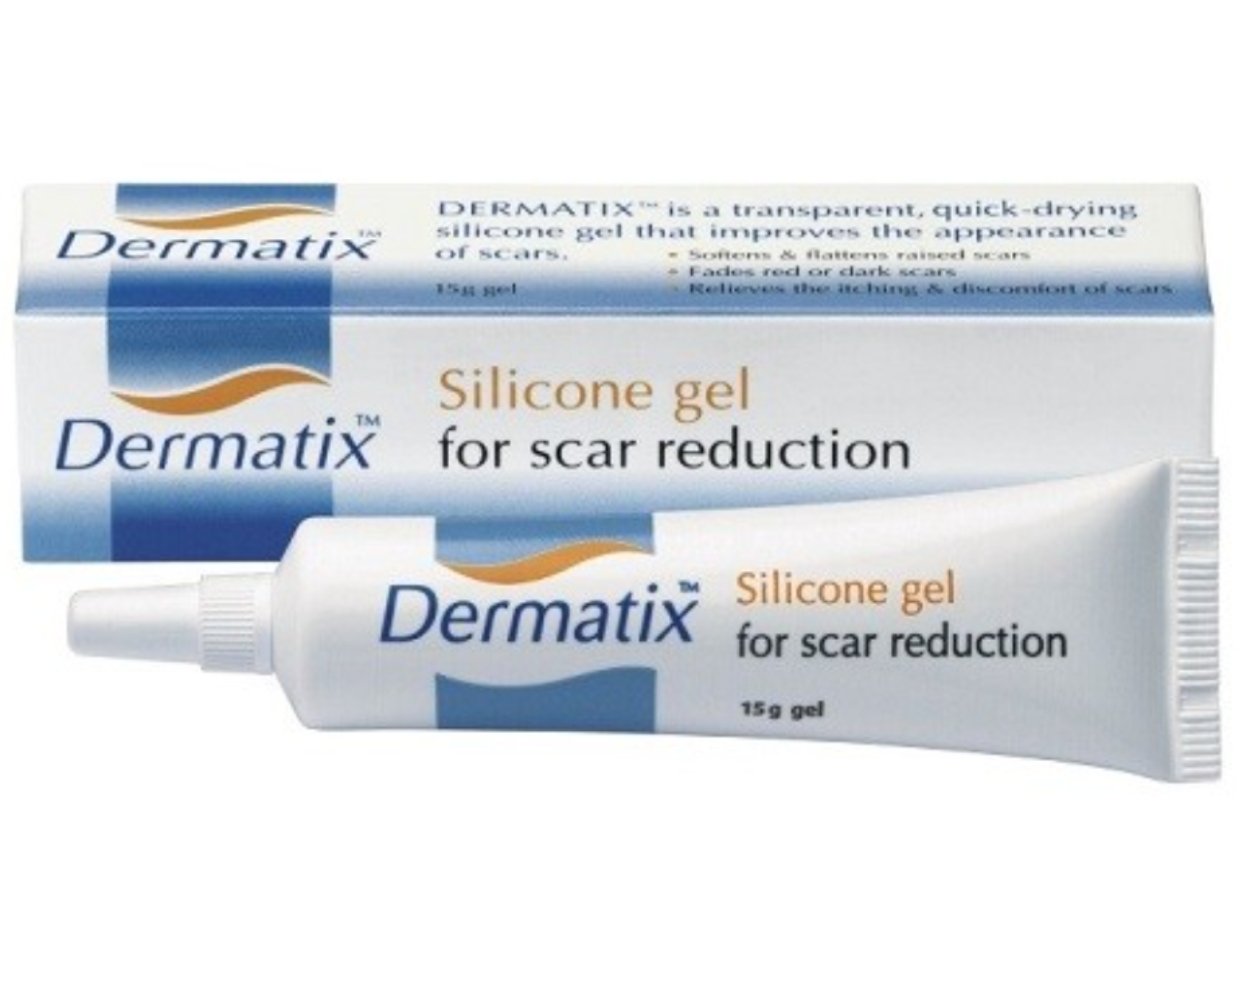 Dermatix Scar Reduction Gel 15g - The Face Method